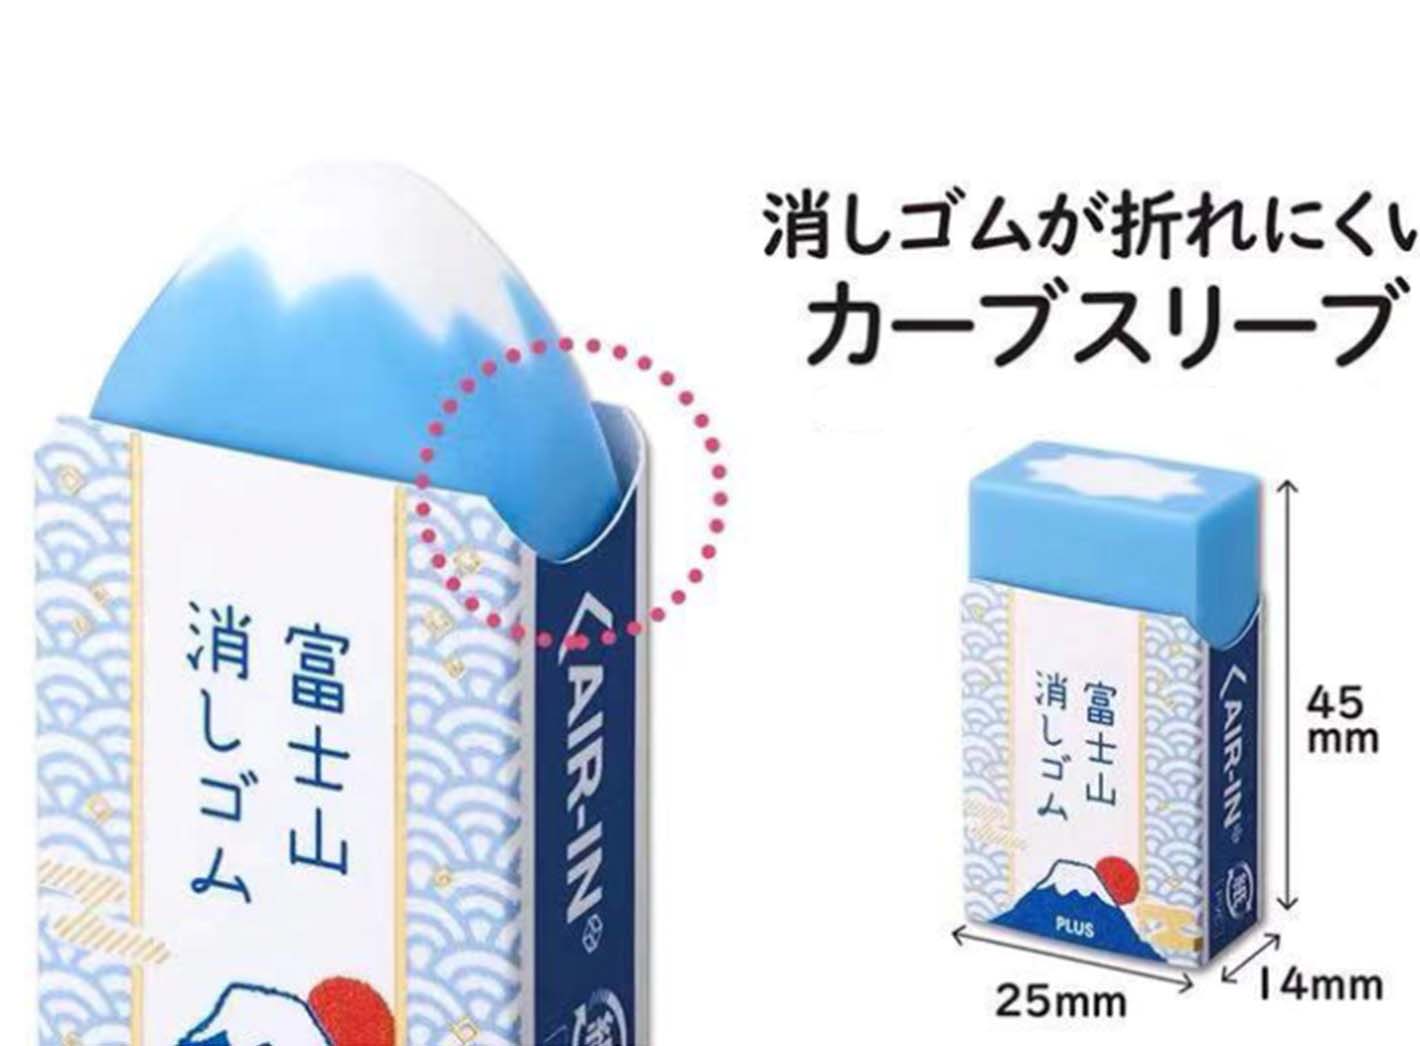 Plus Air-in Mount Fuji Eraser